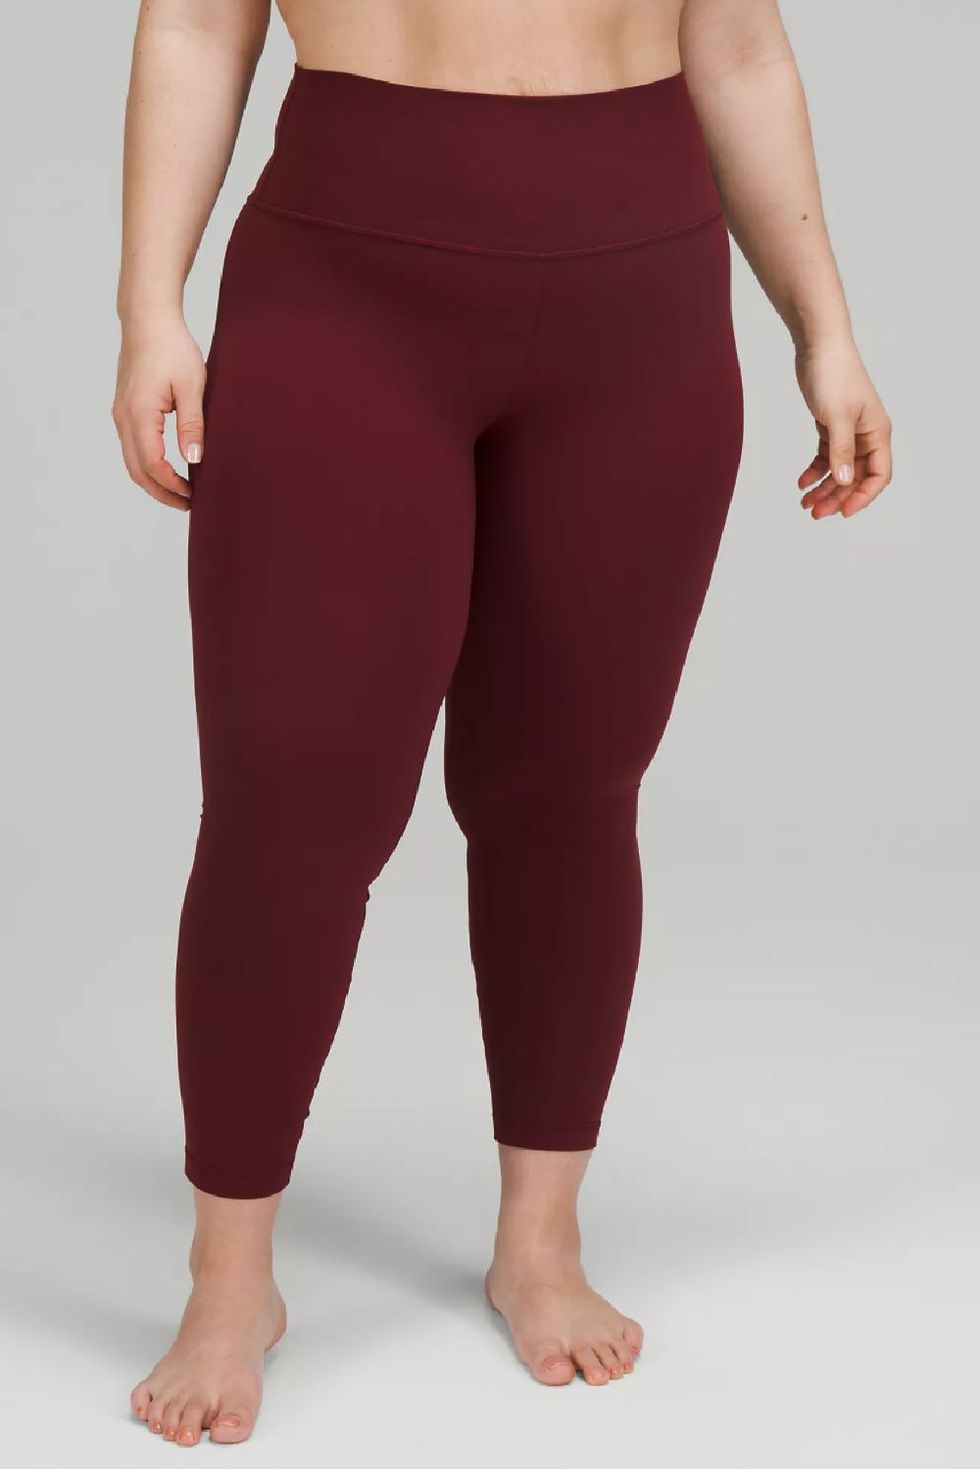 Calia Charcoal Size X Large Ladies Exercise Pants